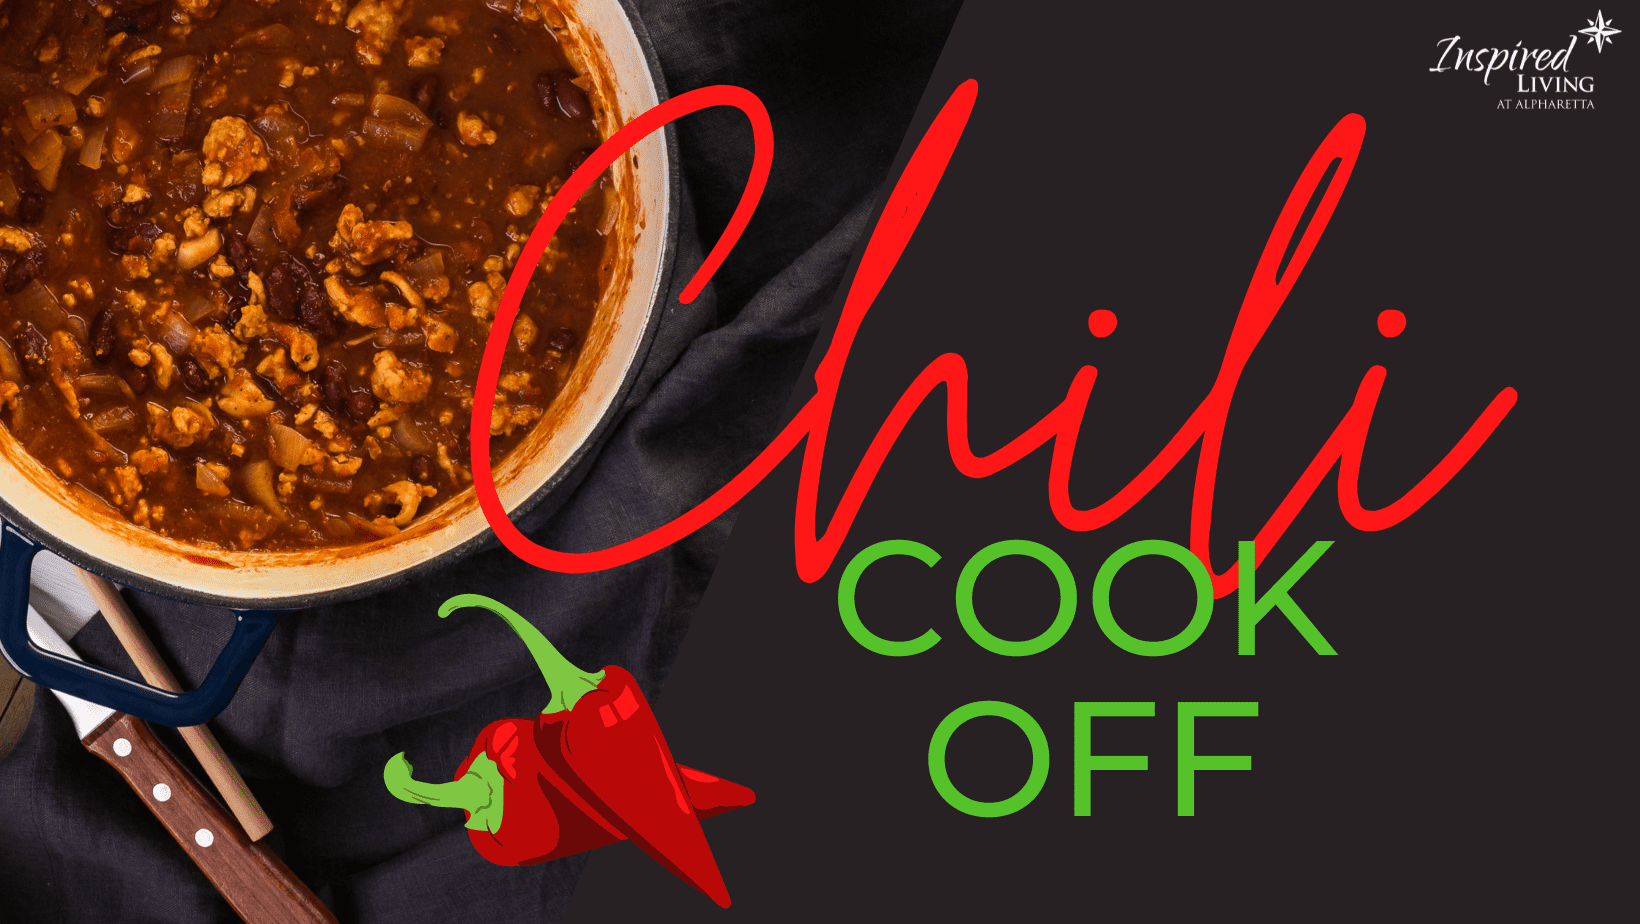 Chili Cook Off Flyer Alpharetta Facebook Cover